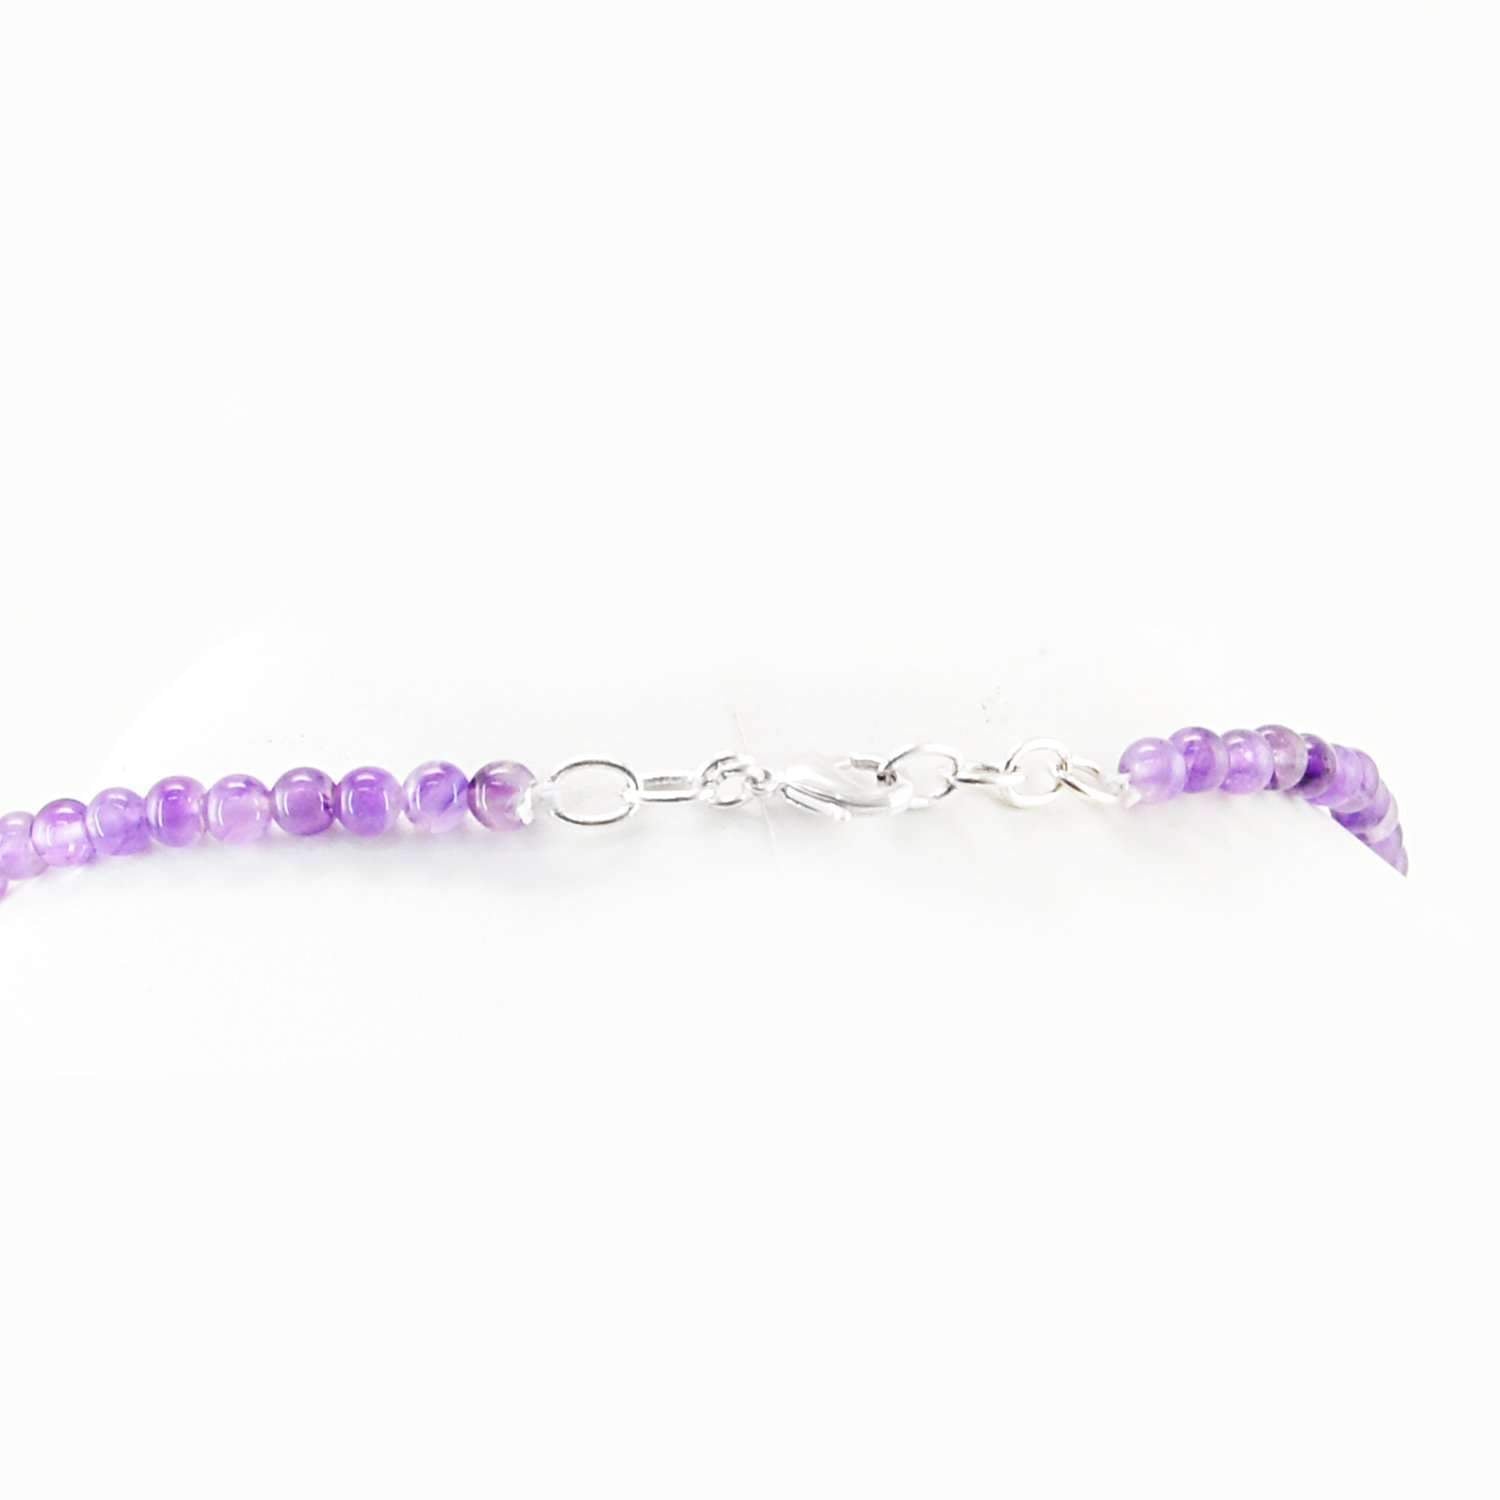 gemsmore:Round Shape Purple Amethyst & Green Jade Necklace Natural Untreated Beads